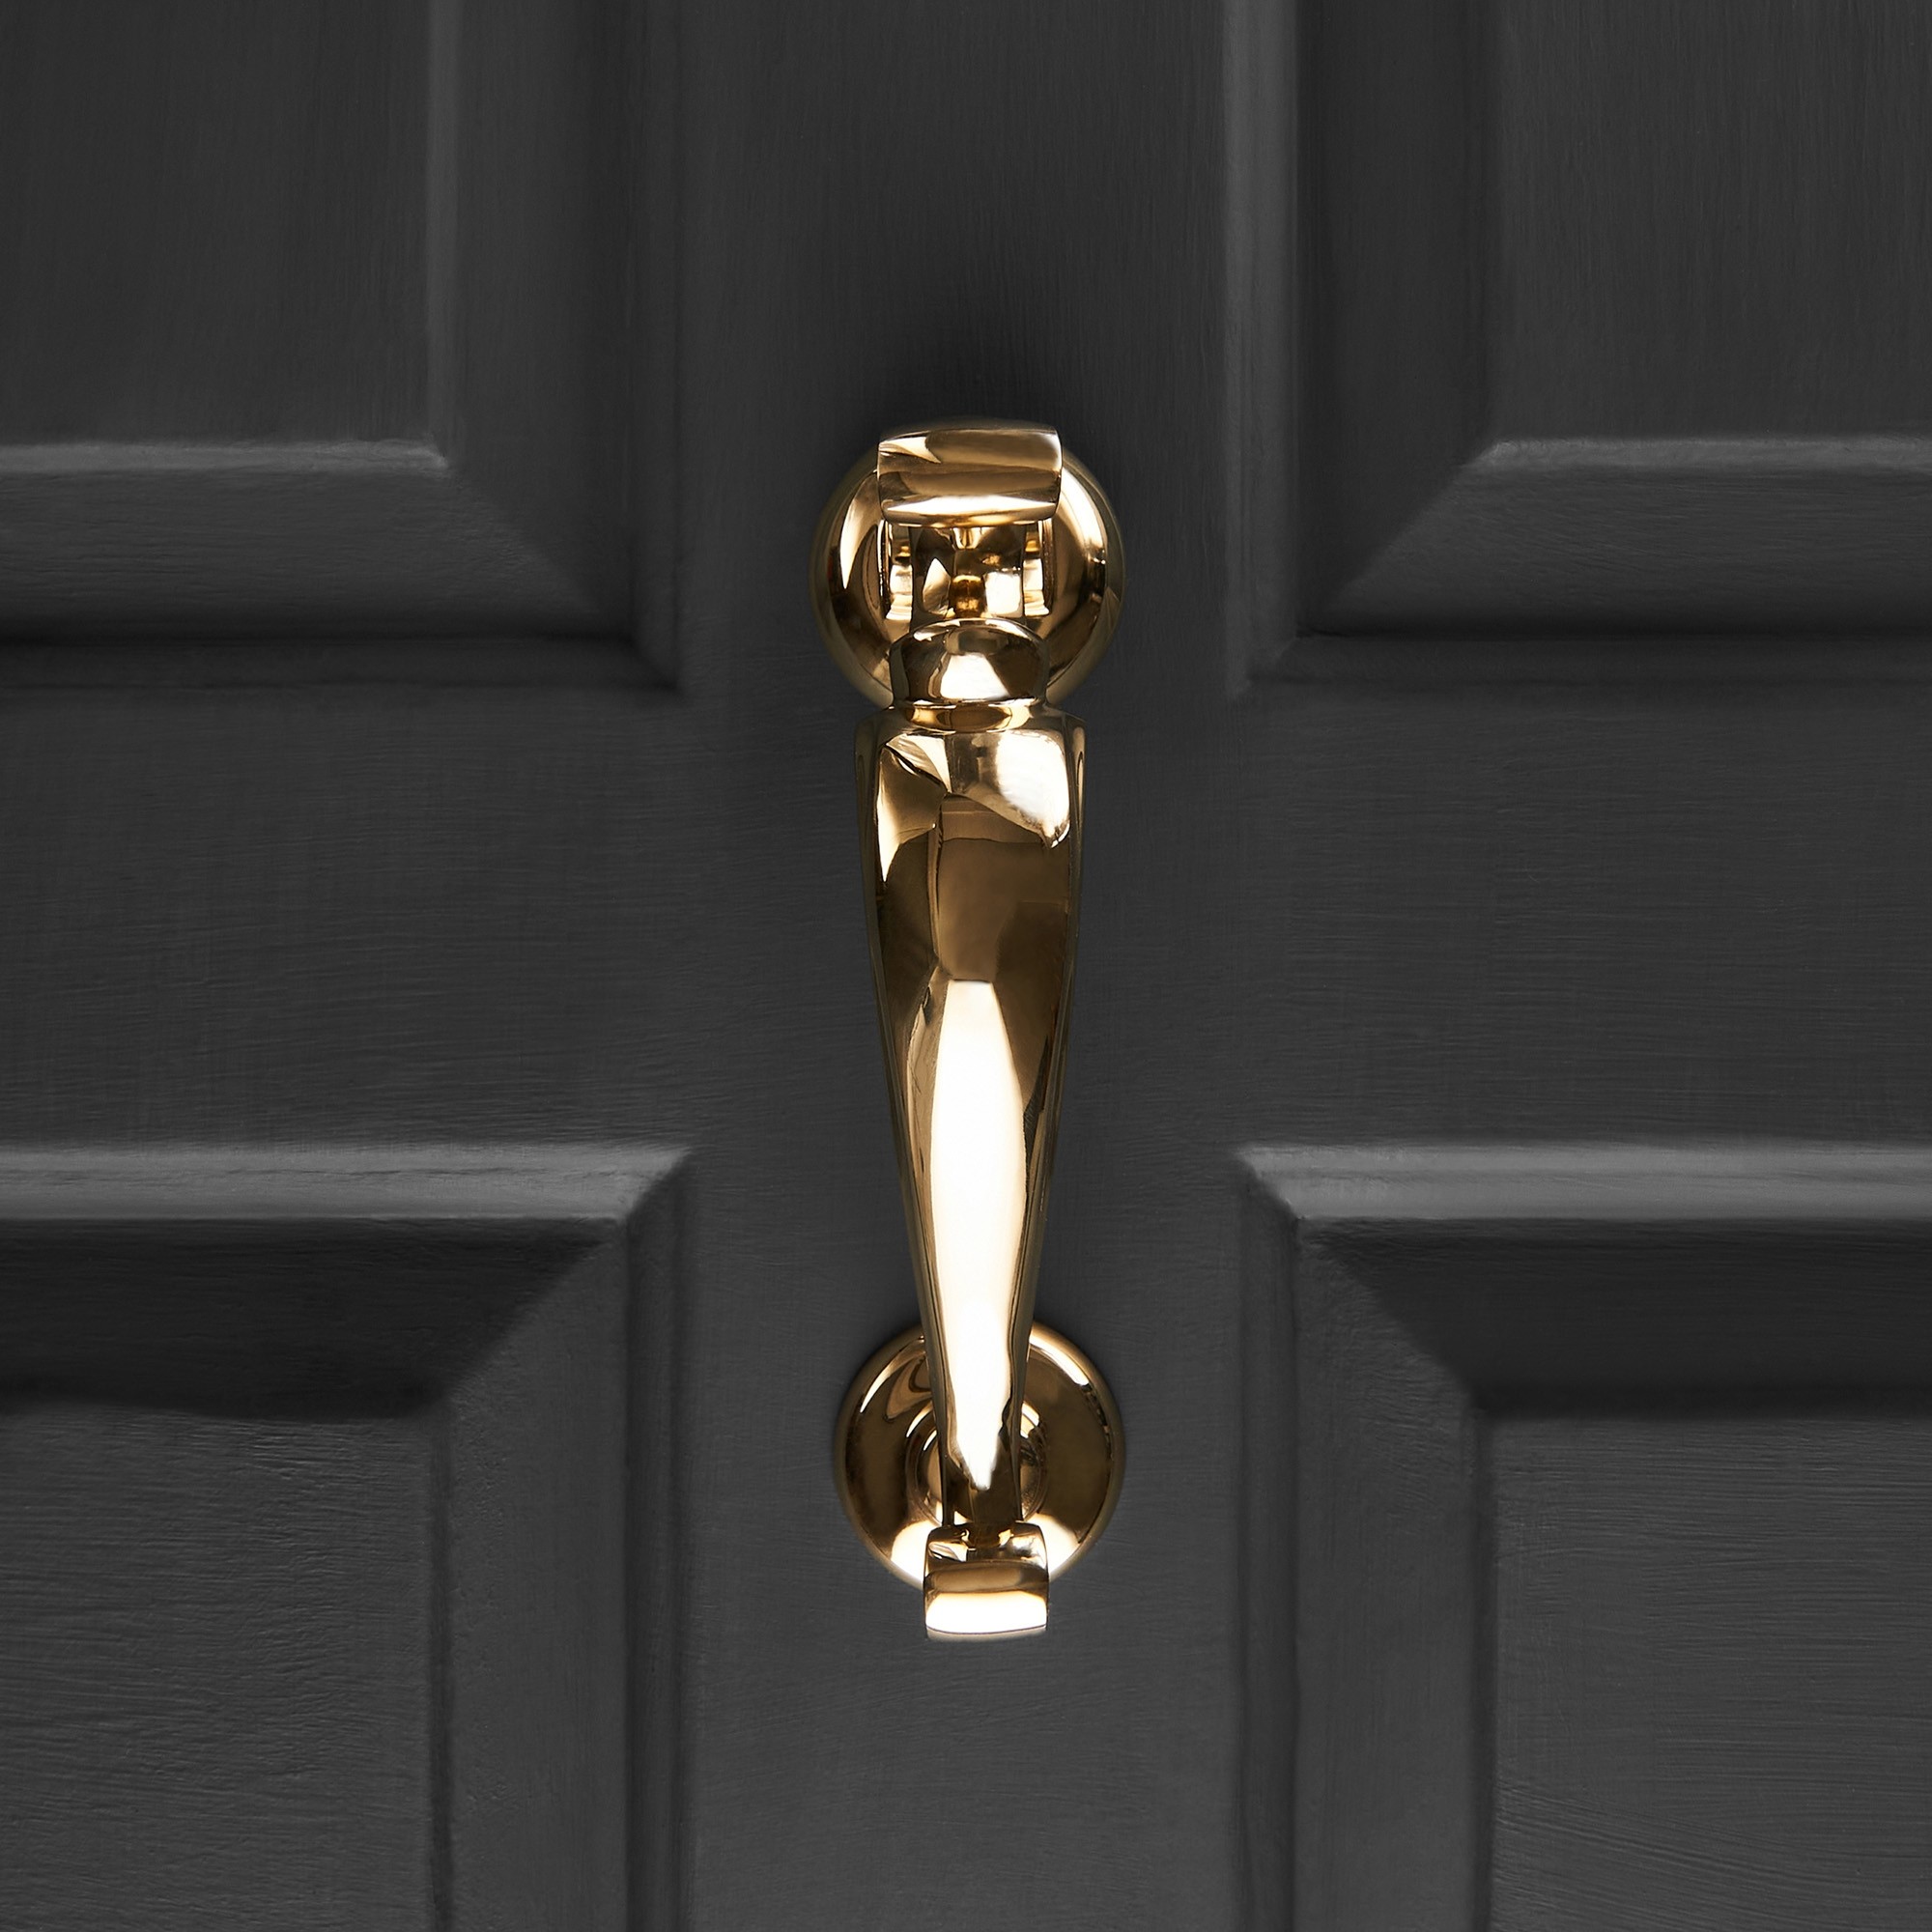 old-doctors-door-knocker-polished-brass3